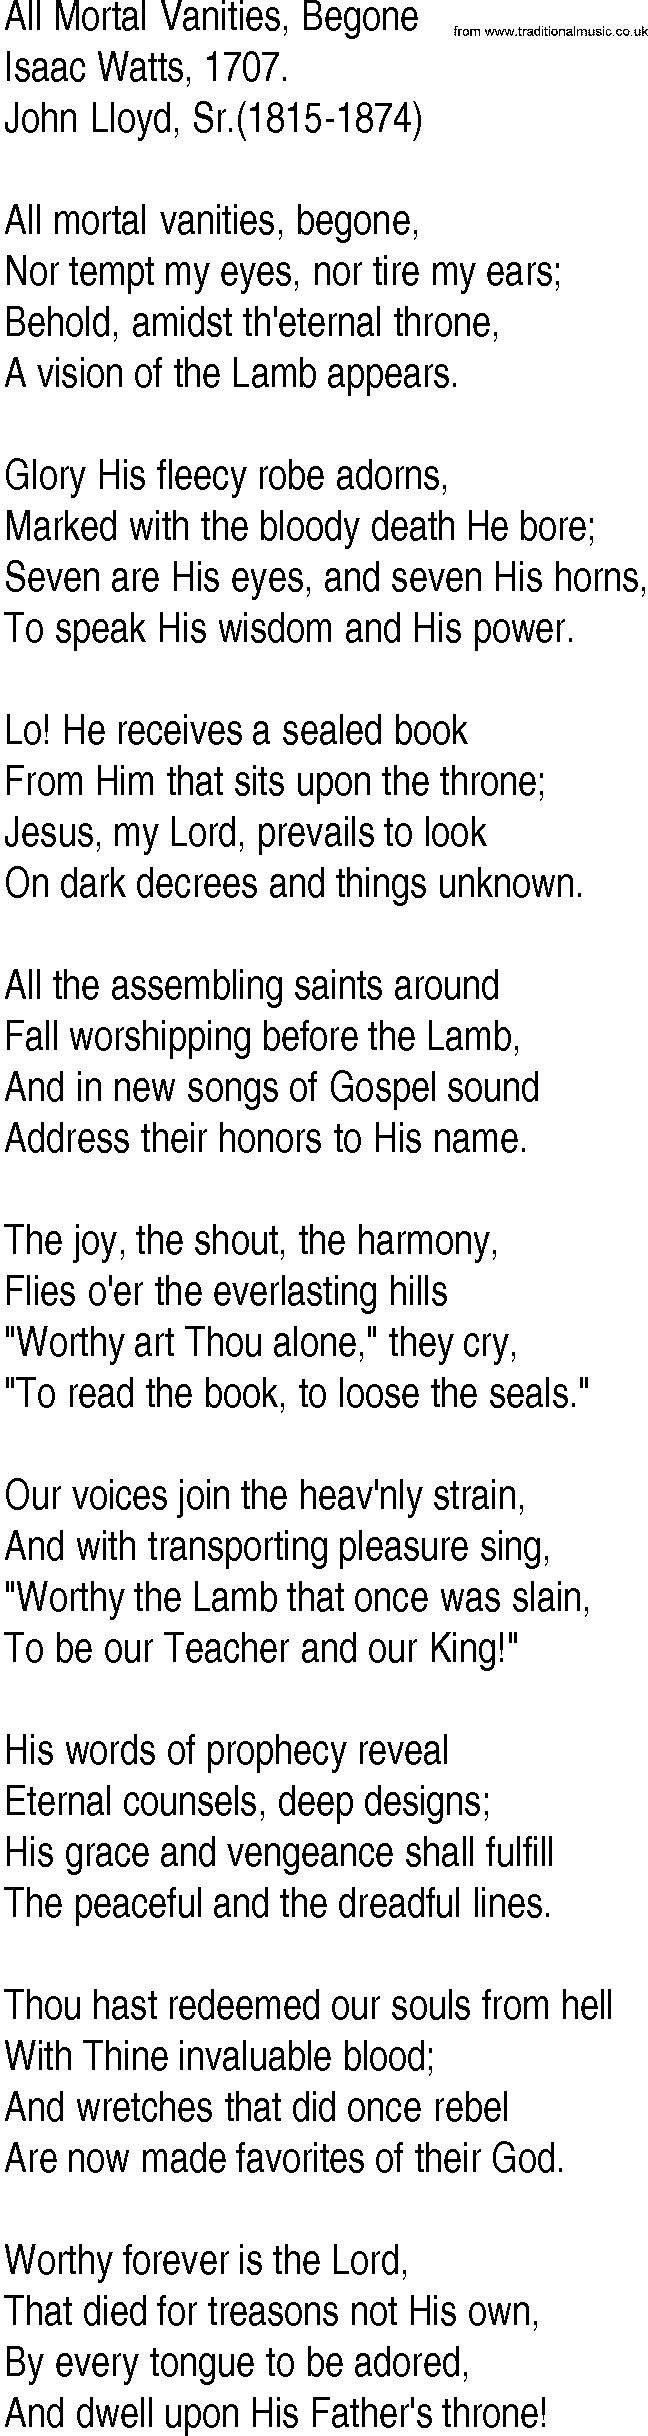 Hymn and Gospel Song: All Mortal Vanities, Begone by Isaac Watts lyrics